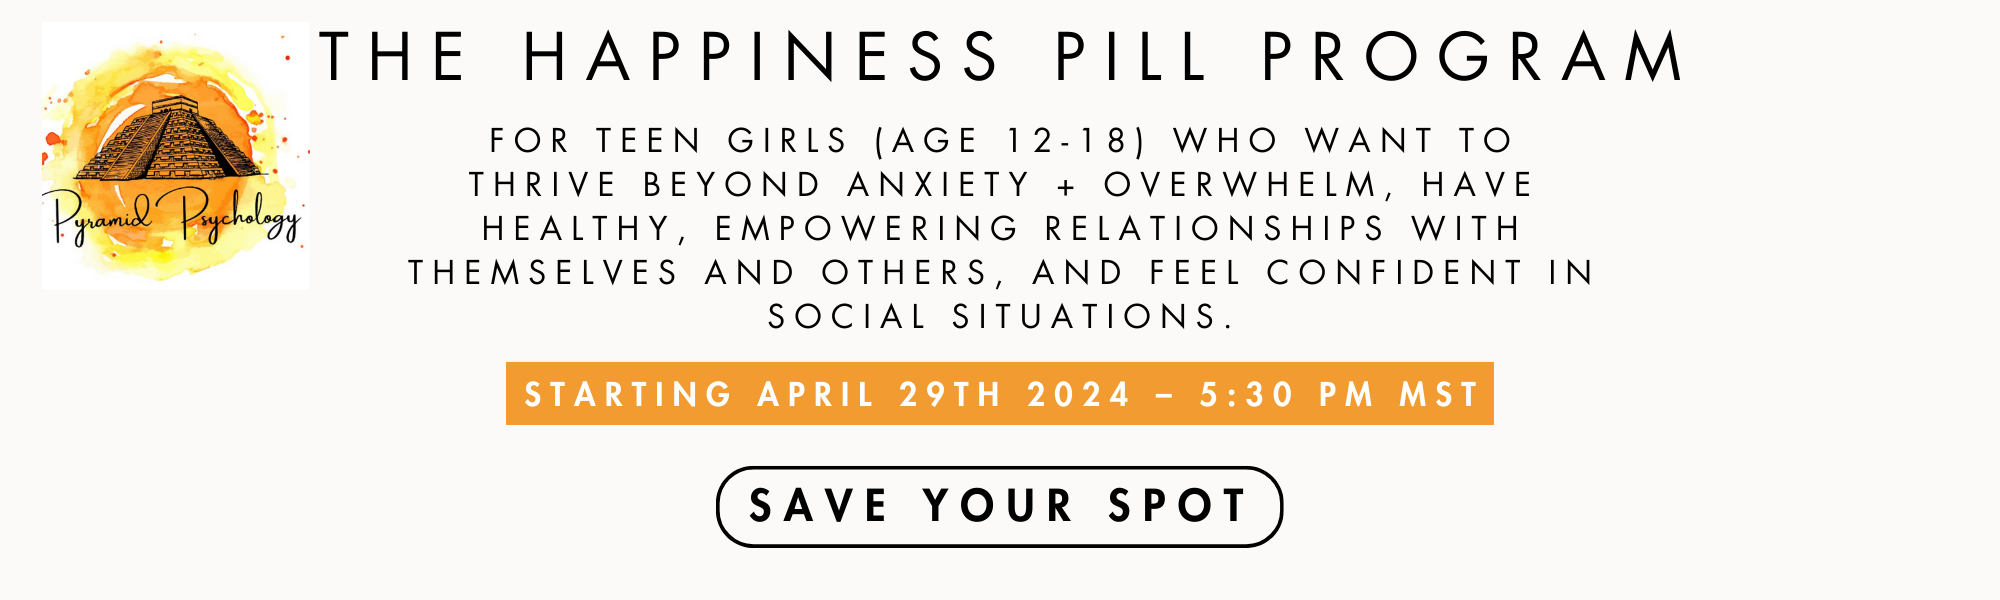 happiness pill program banner